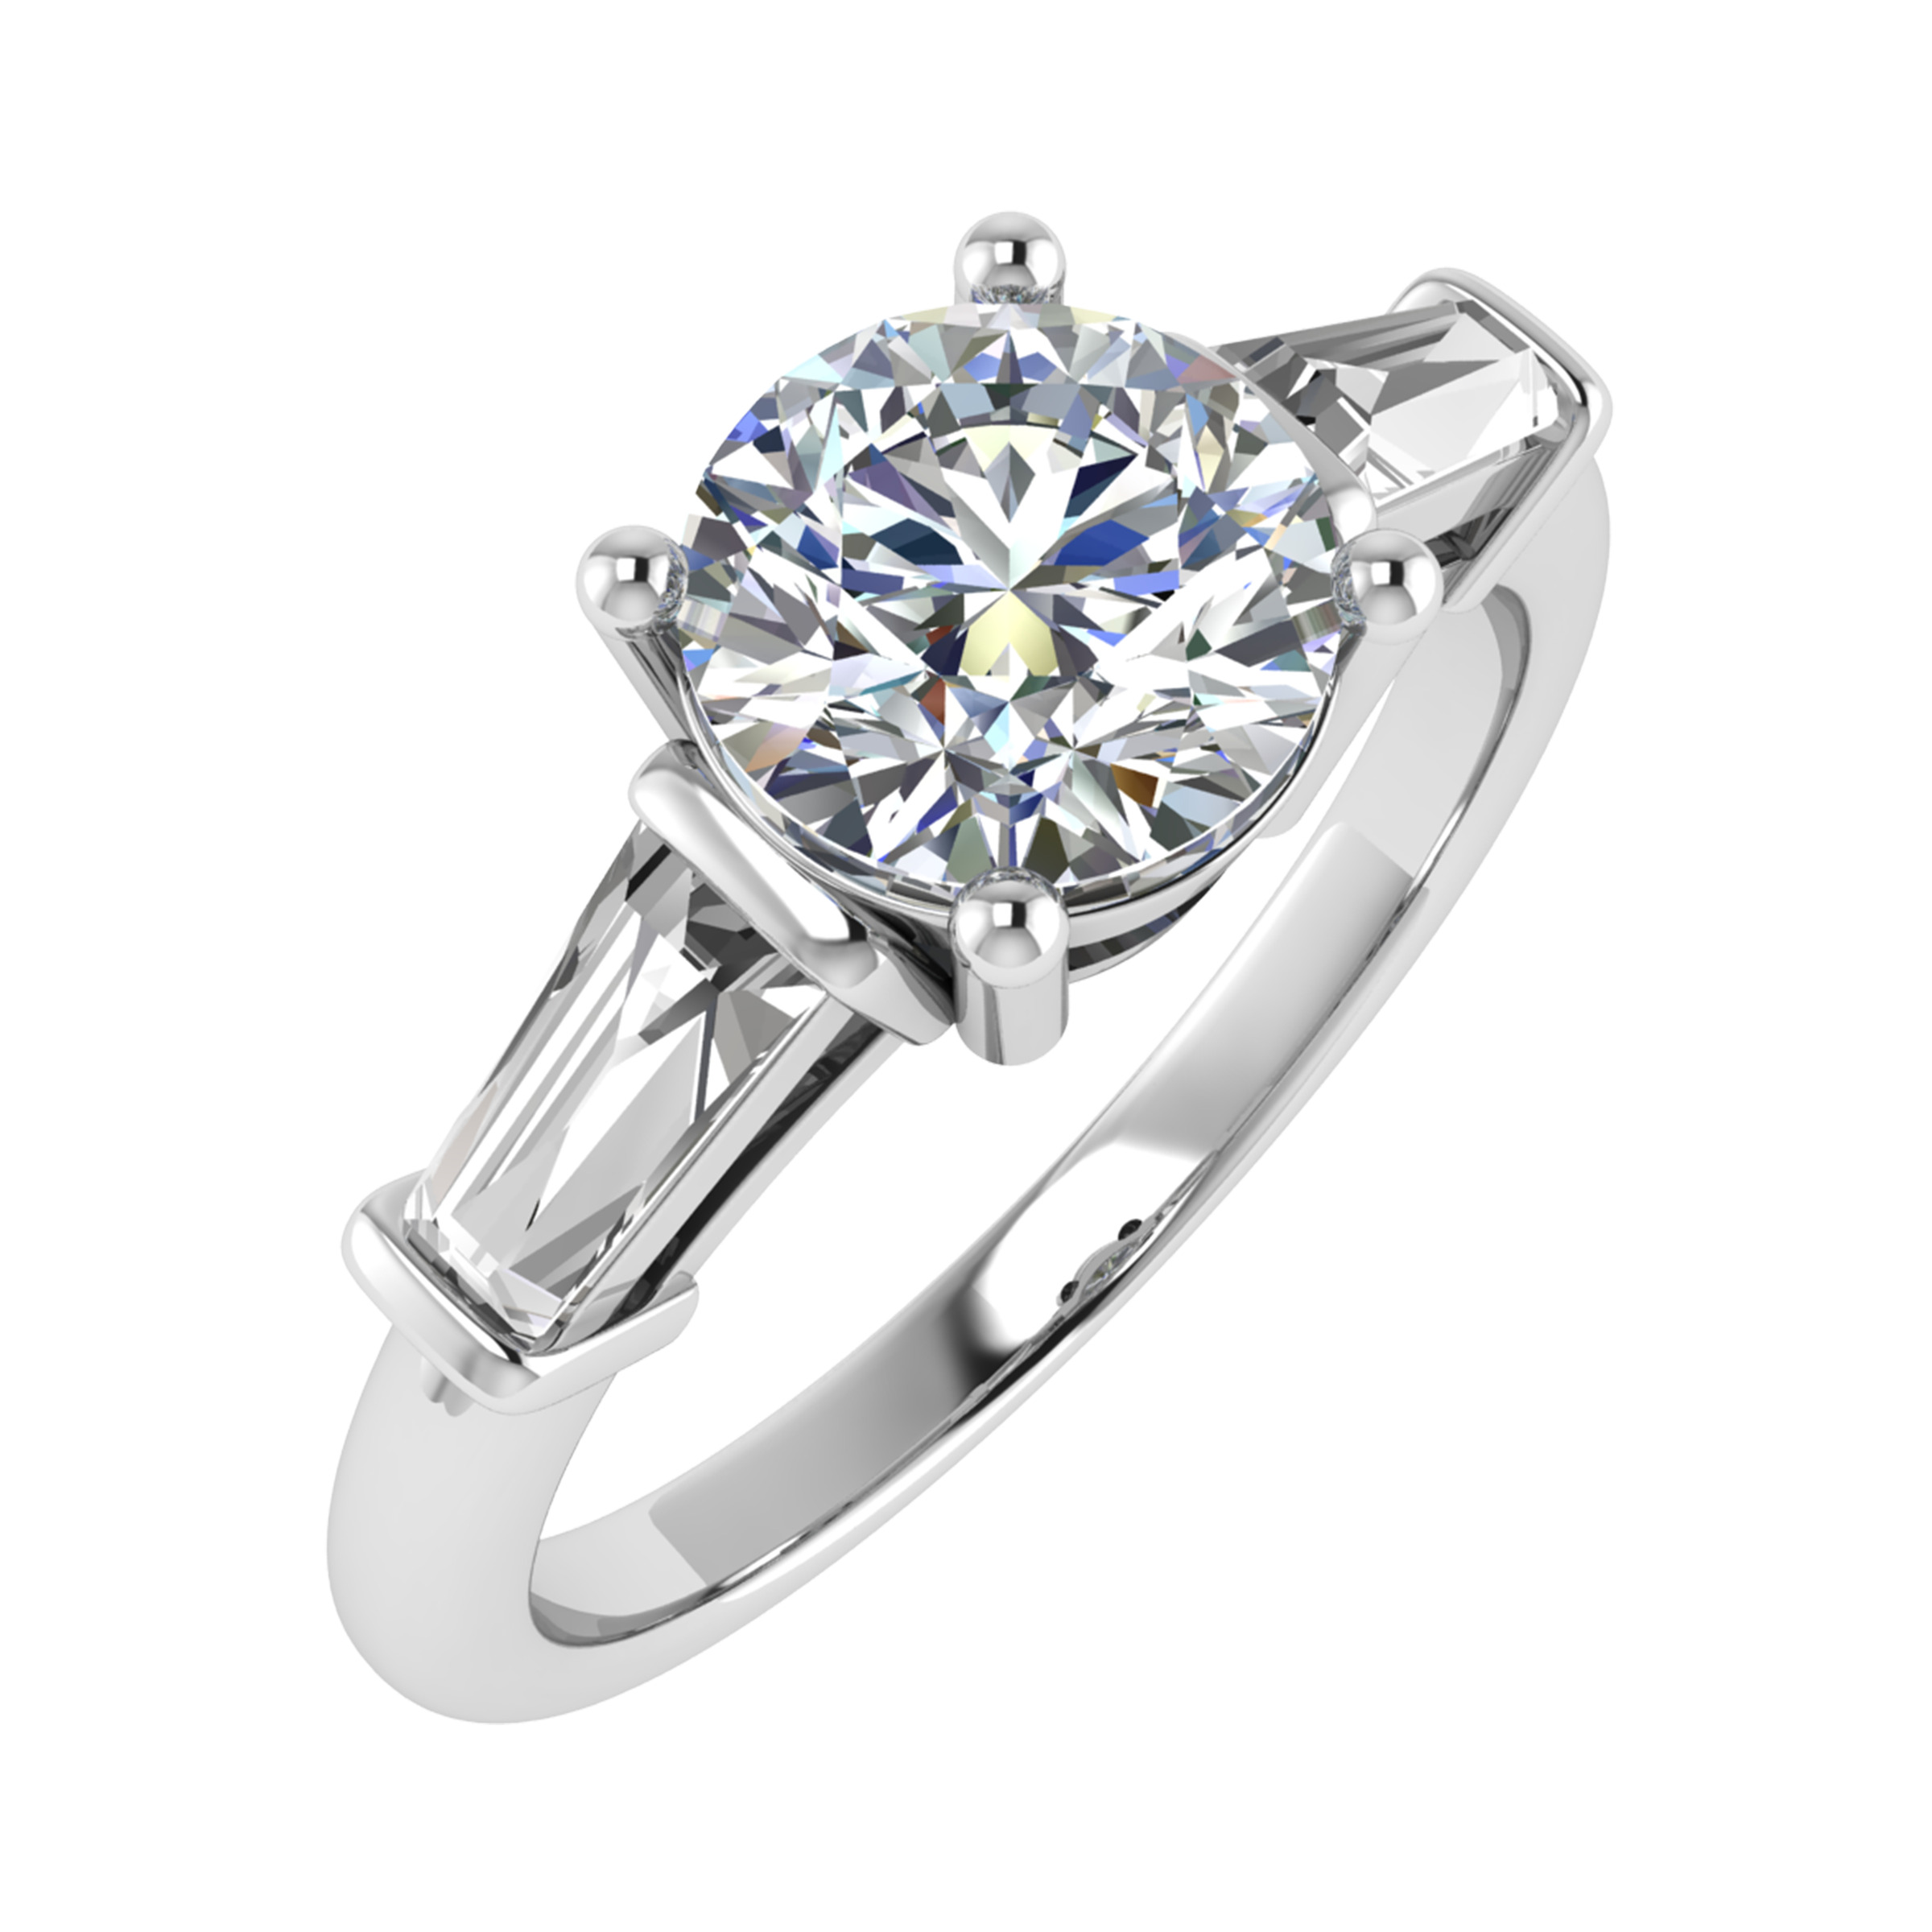 0.50 - 1.50 Carat Natural Diamond Trilogy Engagement Rings